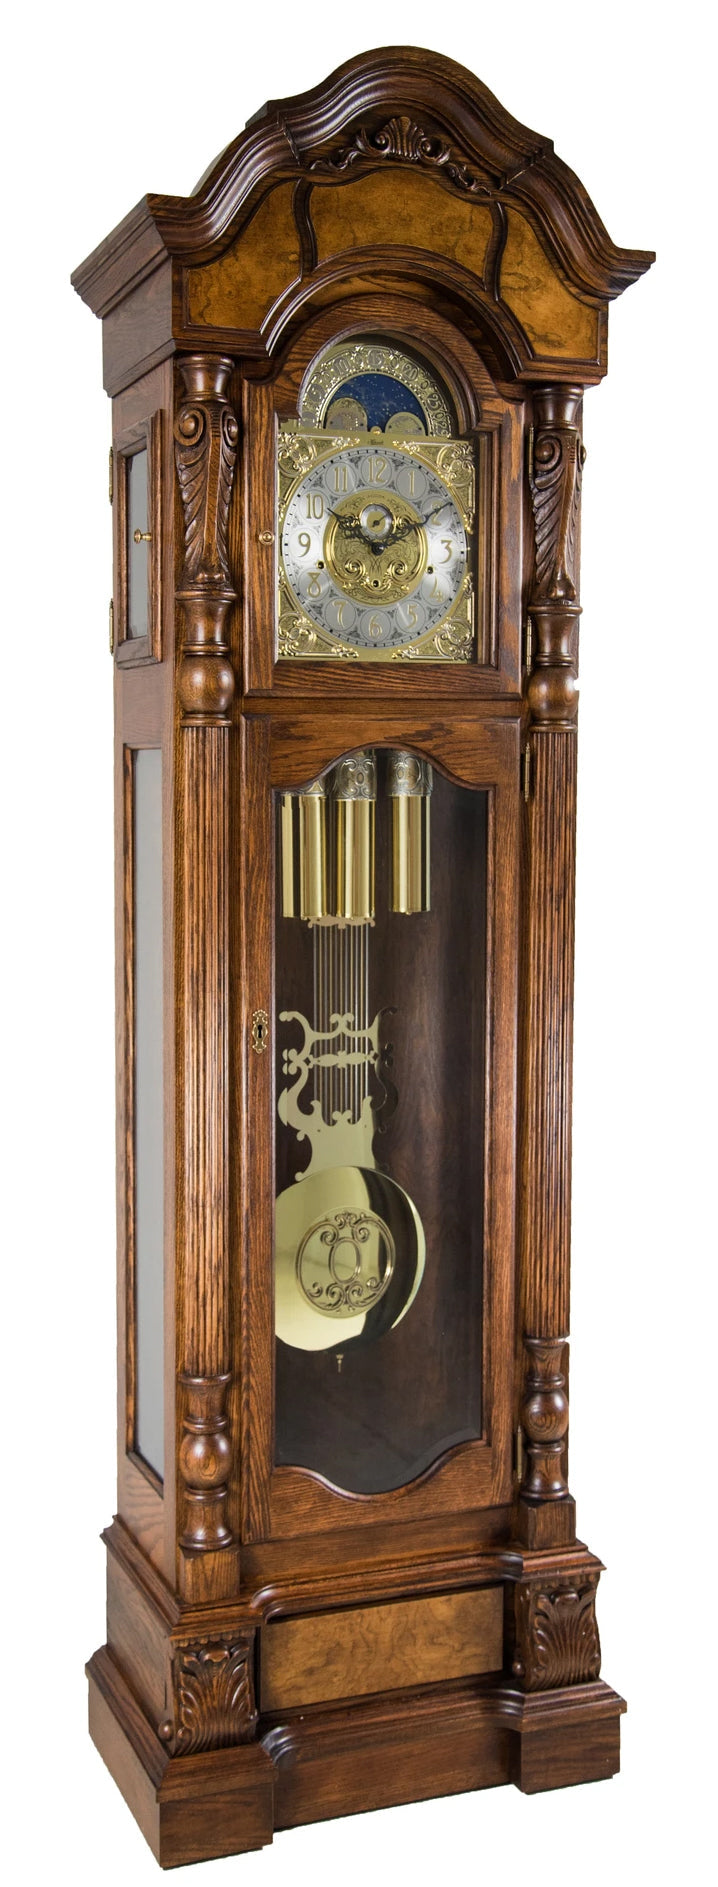 Anstead Tubular Chimes Grandfather Clock by Hermle Clocks